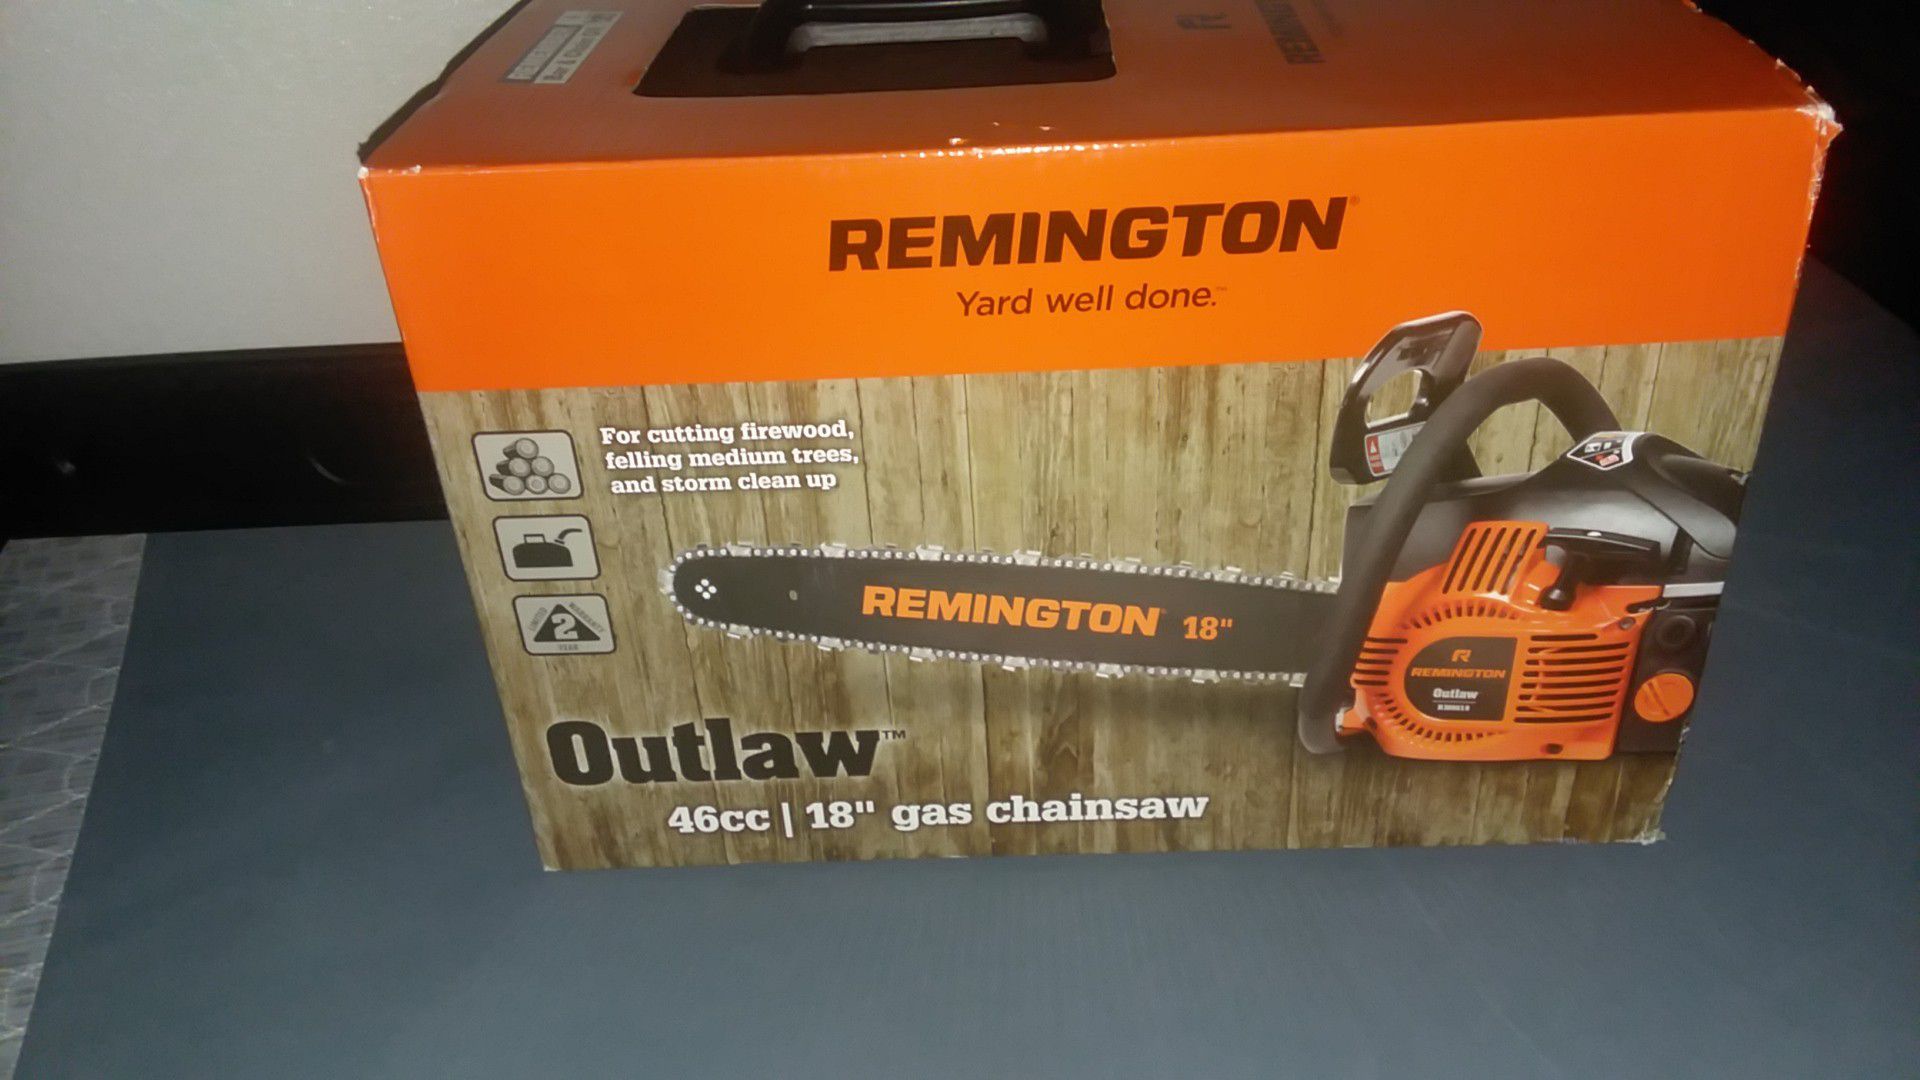 Remington chainsaw Amazing!!! Just lowered my price